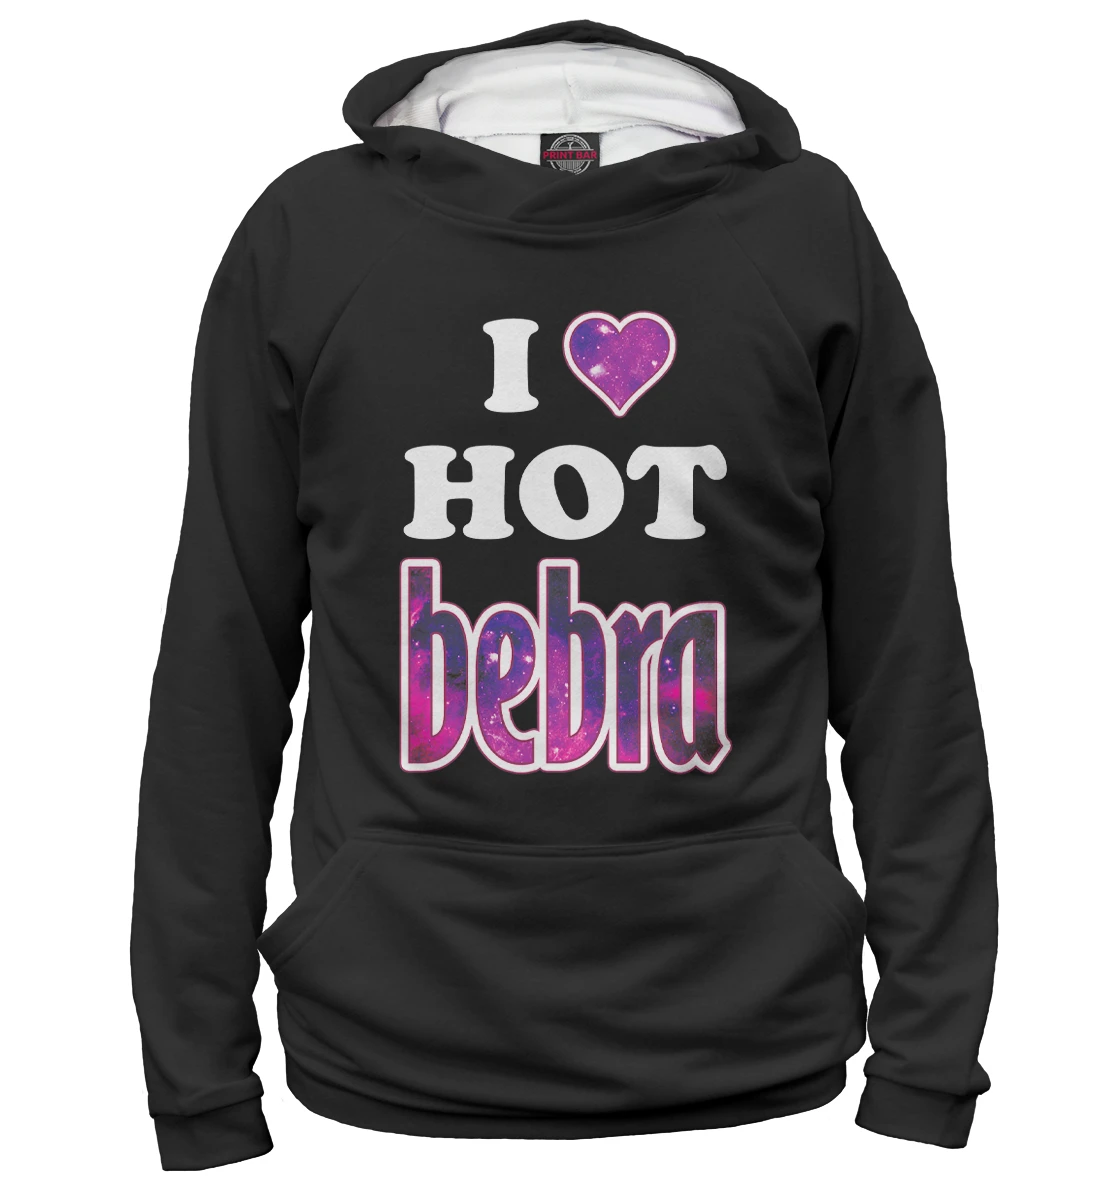 I love hot bebra. Худи i Love hot Bebra. Кофта i Love hot Bebra. Кофта l Love hot Bebra. Футболка i Love hot Bebra.